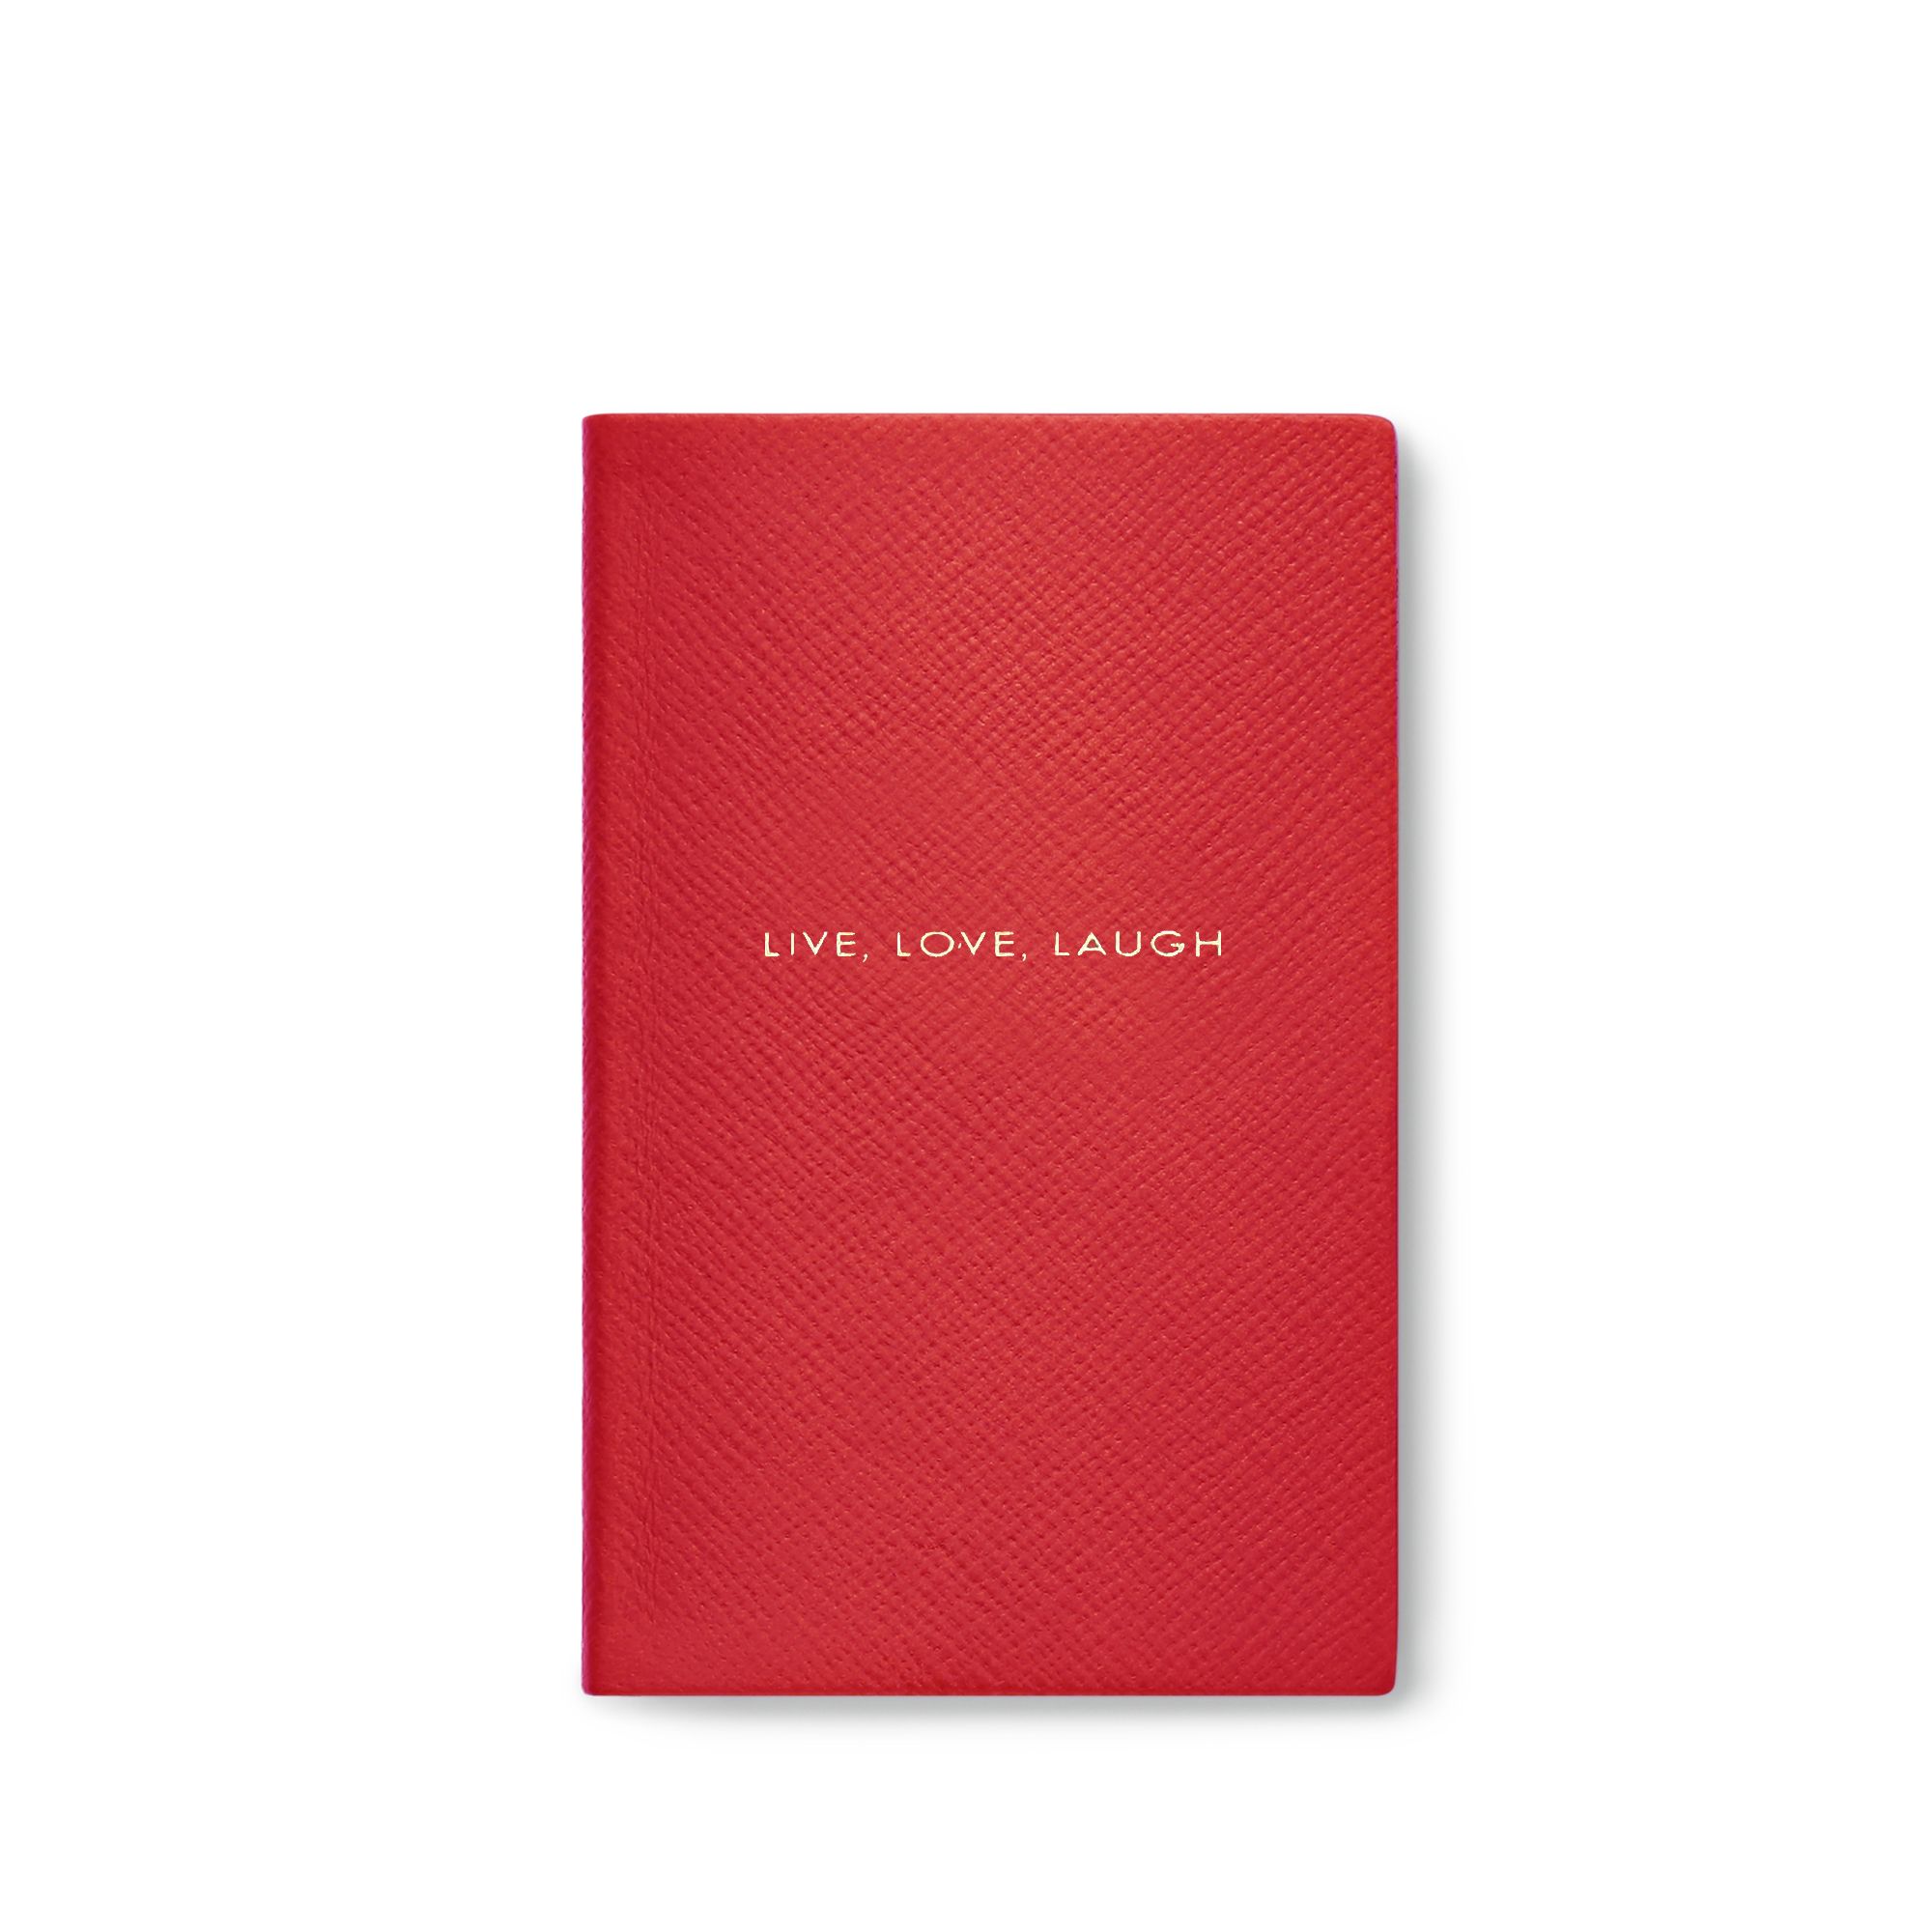 Live Love Laugh Panama Notebook in scarlet red | Smythson | Smythson